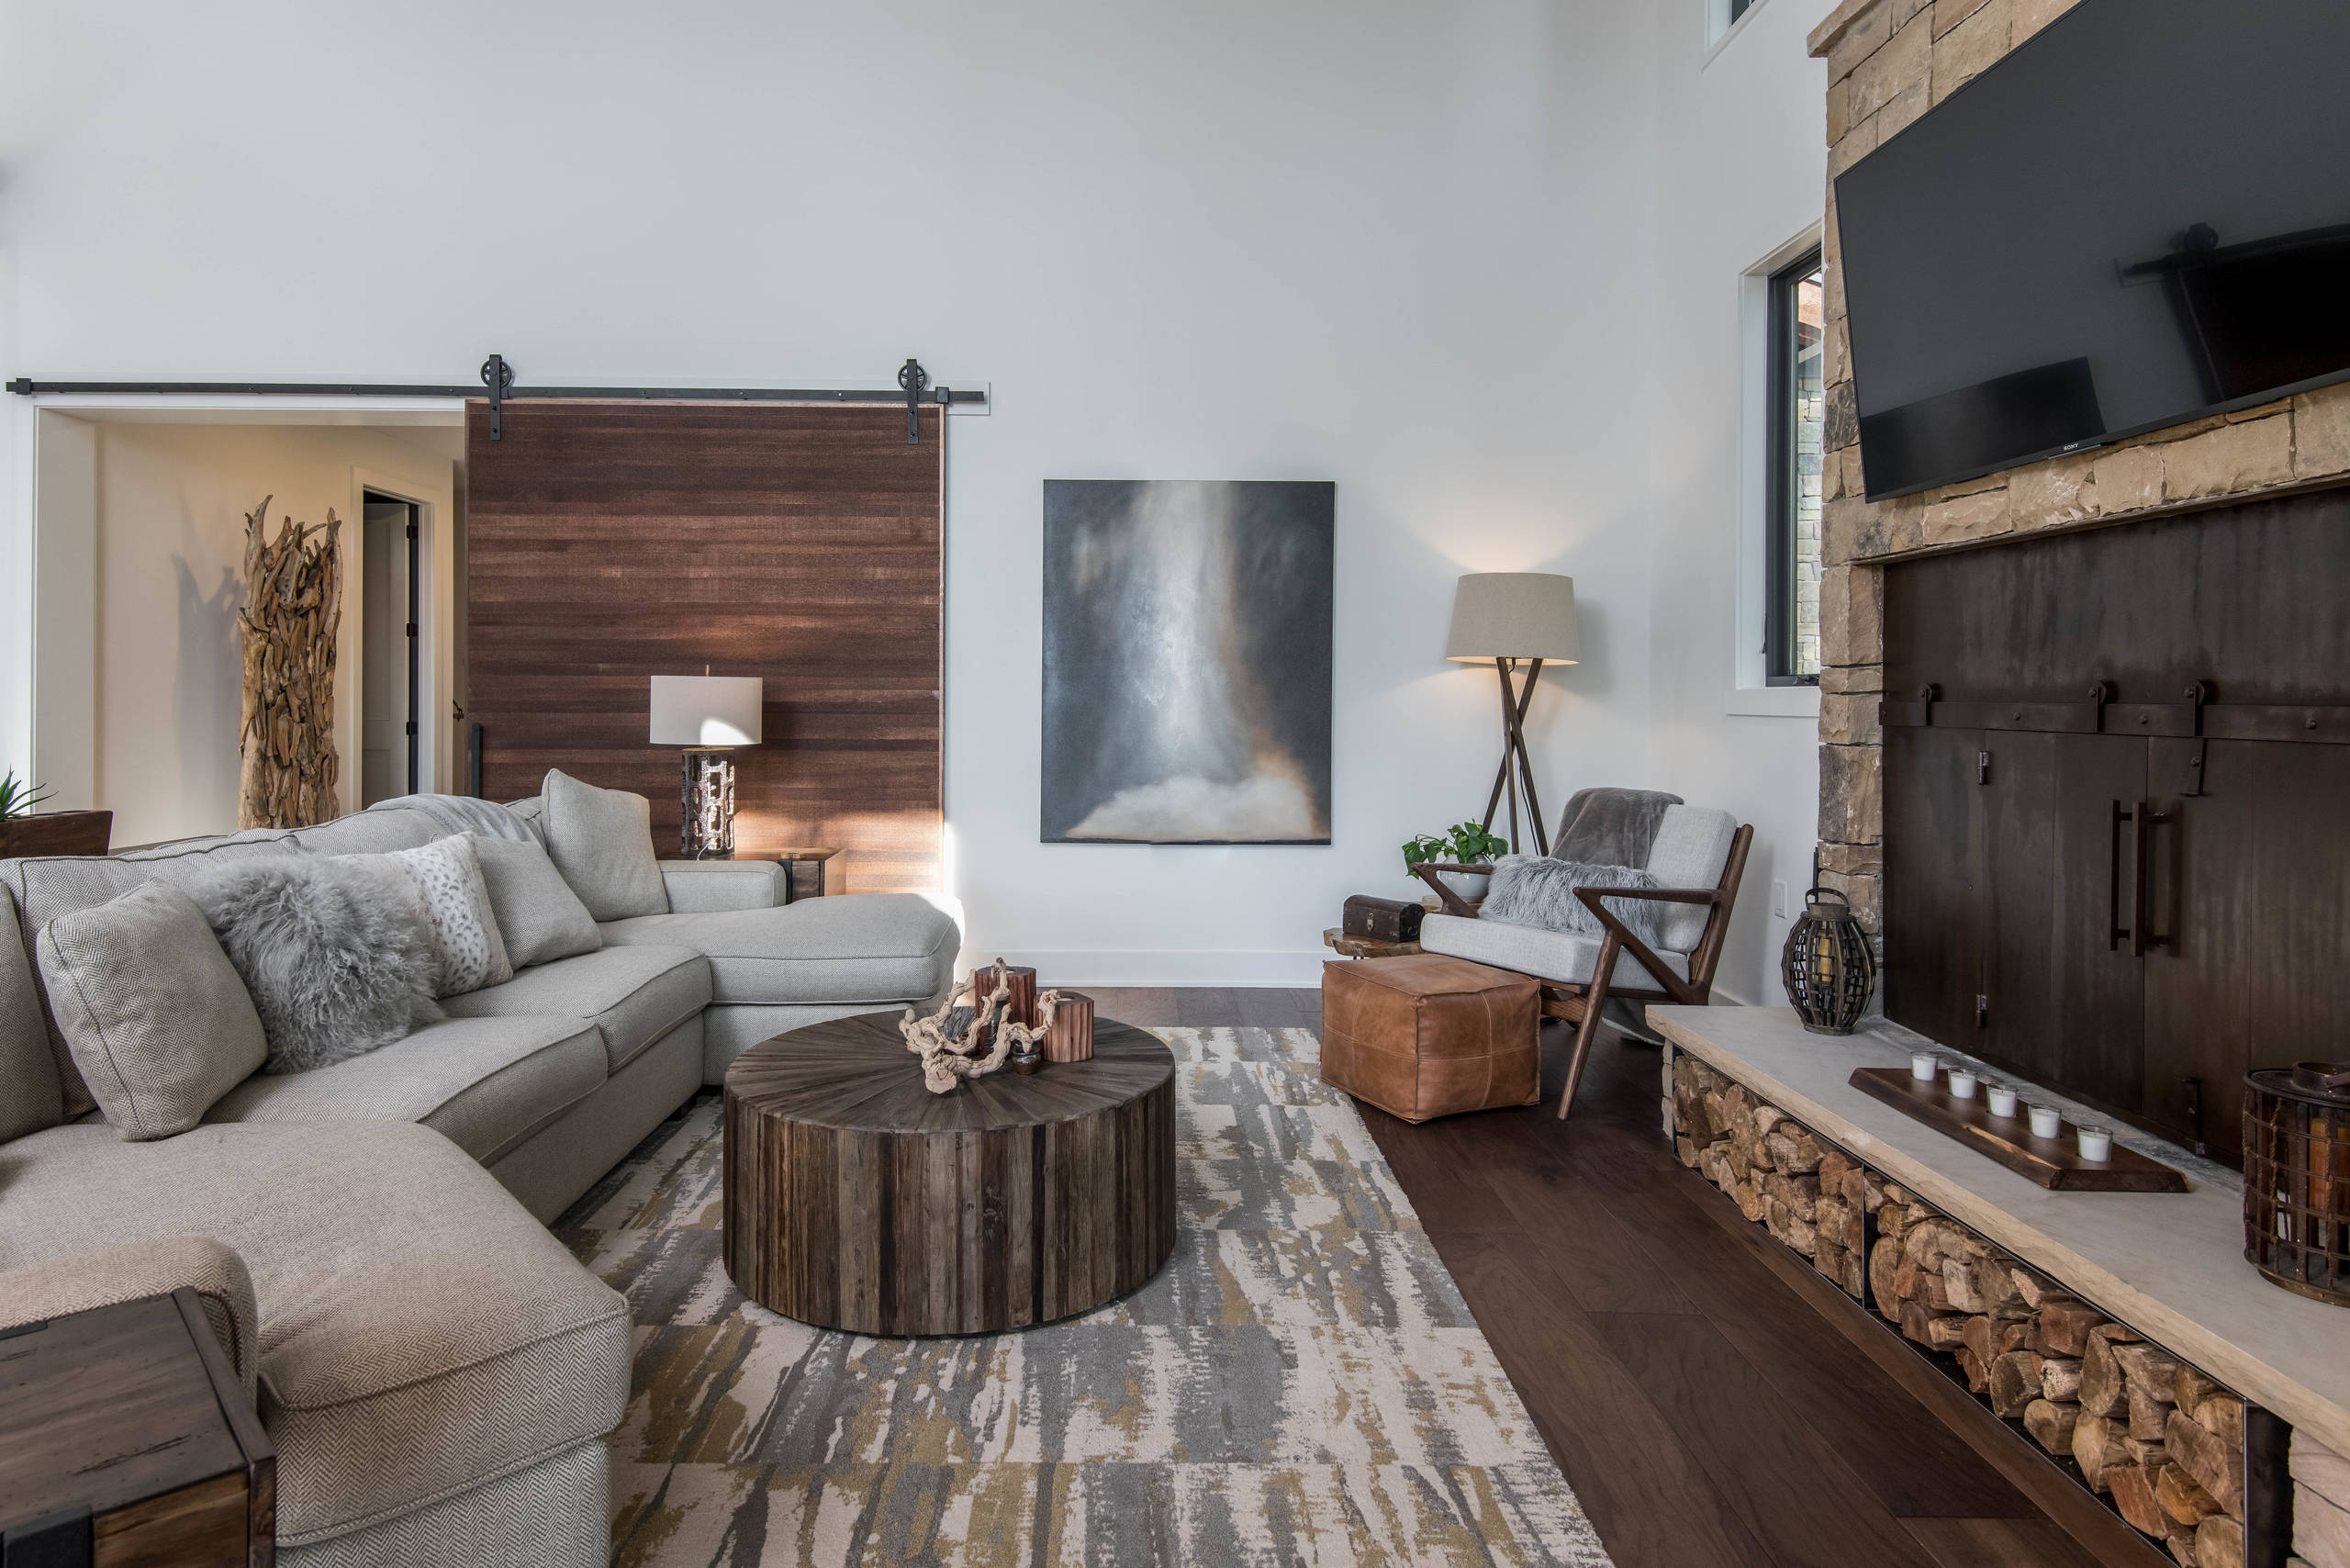 75 Rustic Living Room Ideas You Ll Love